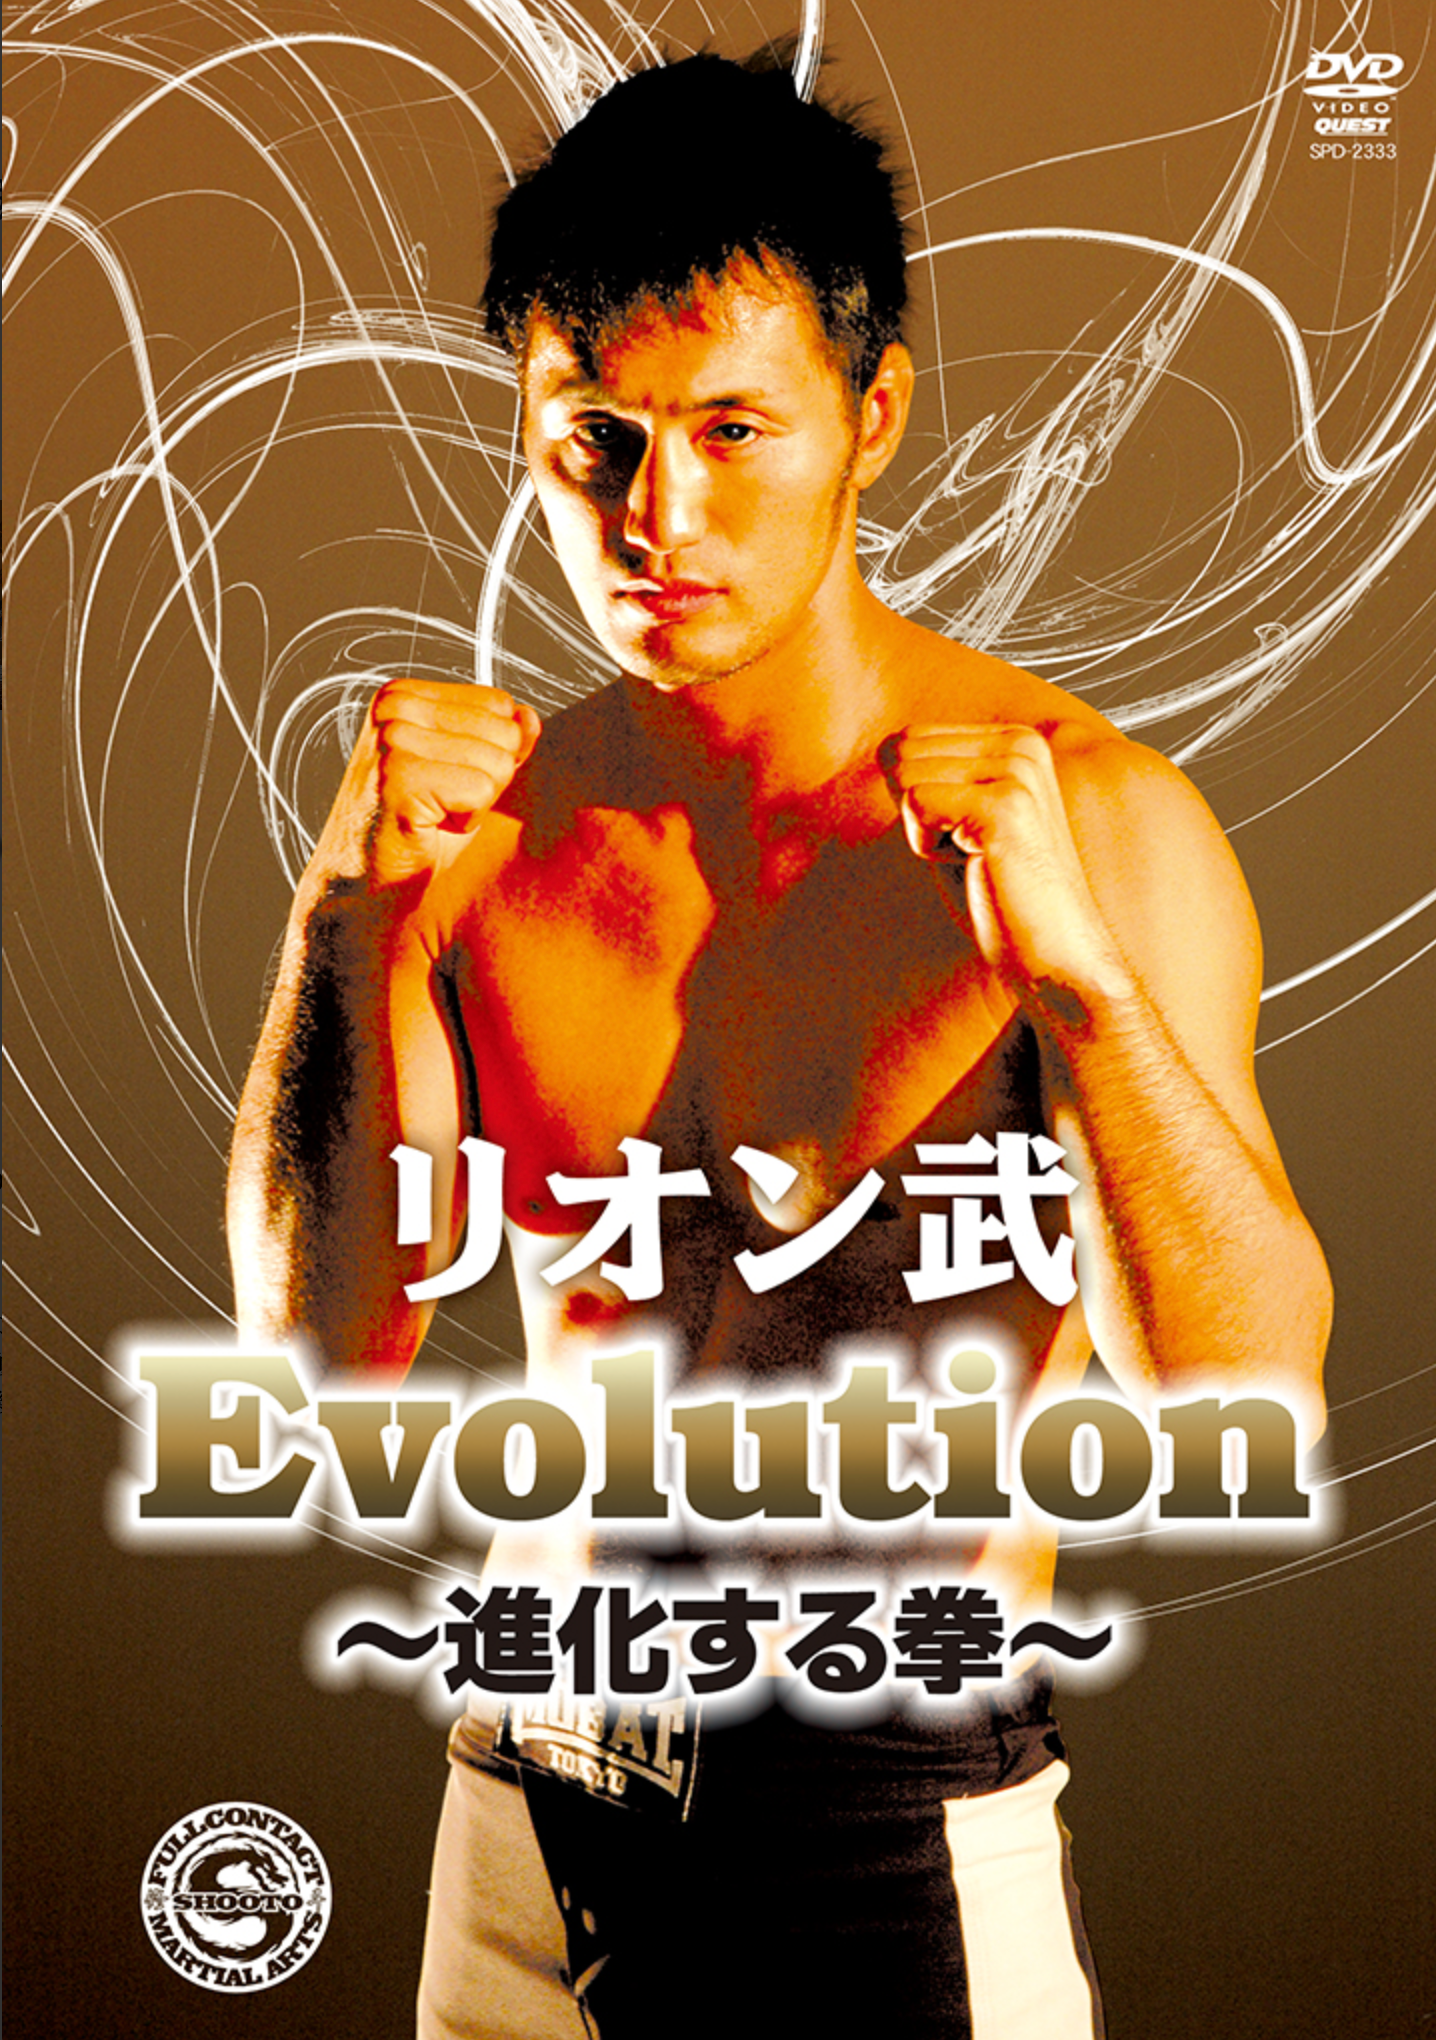 Lion Takeshi MMA Evolution DVD - Budovideos Inc